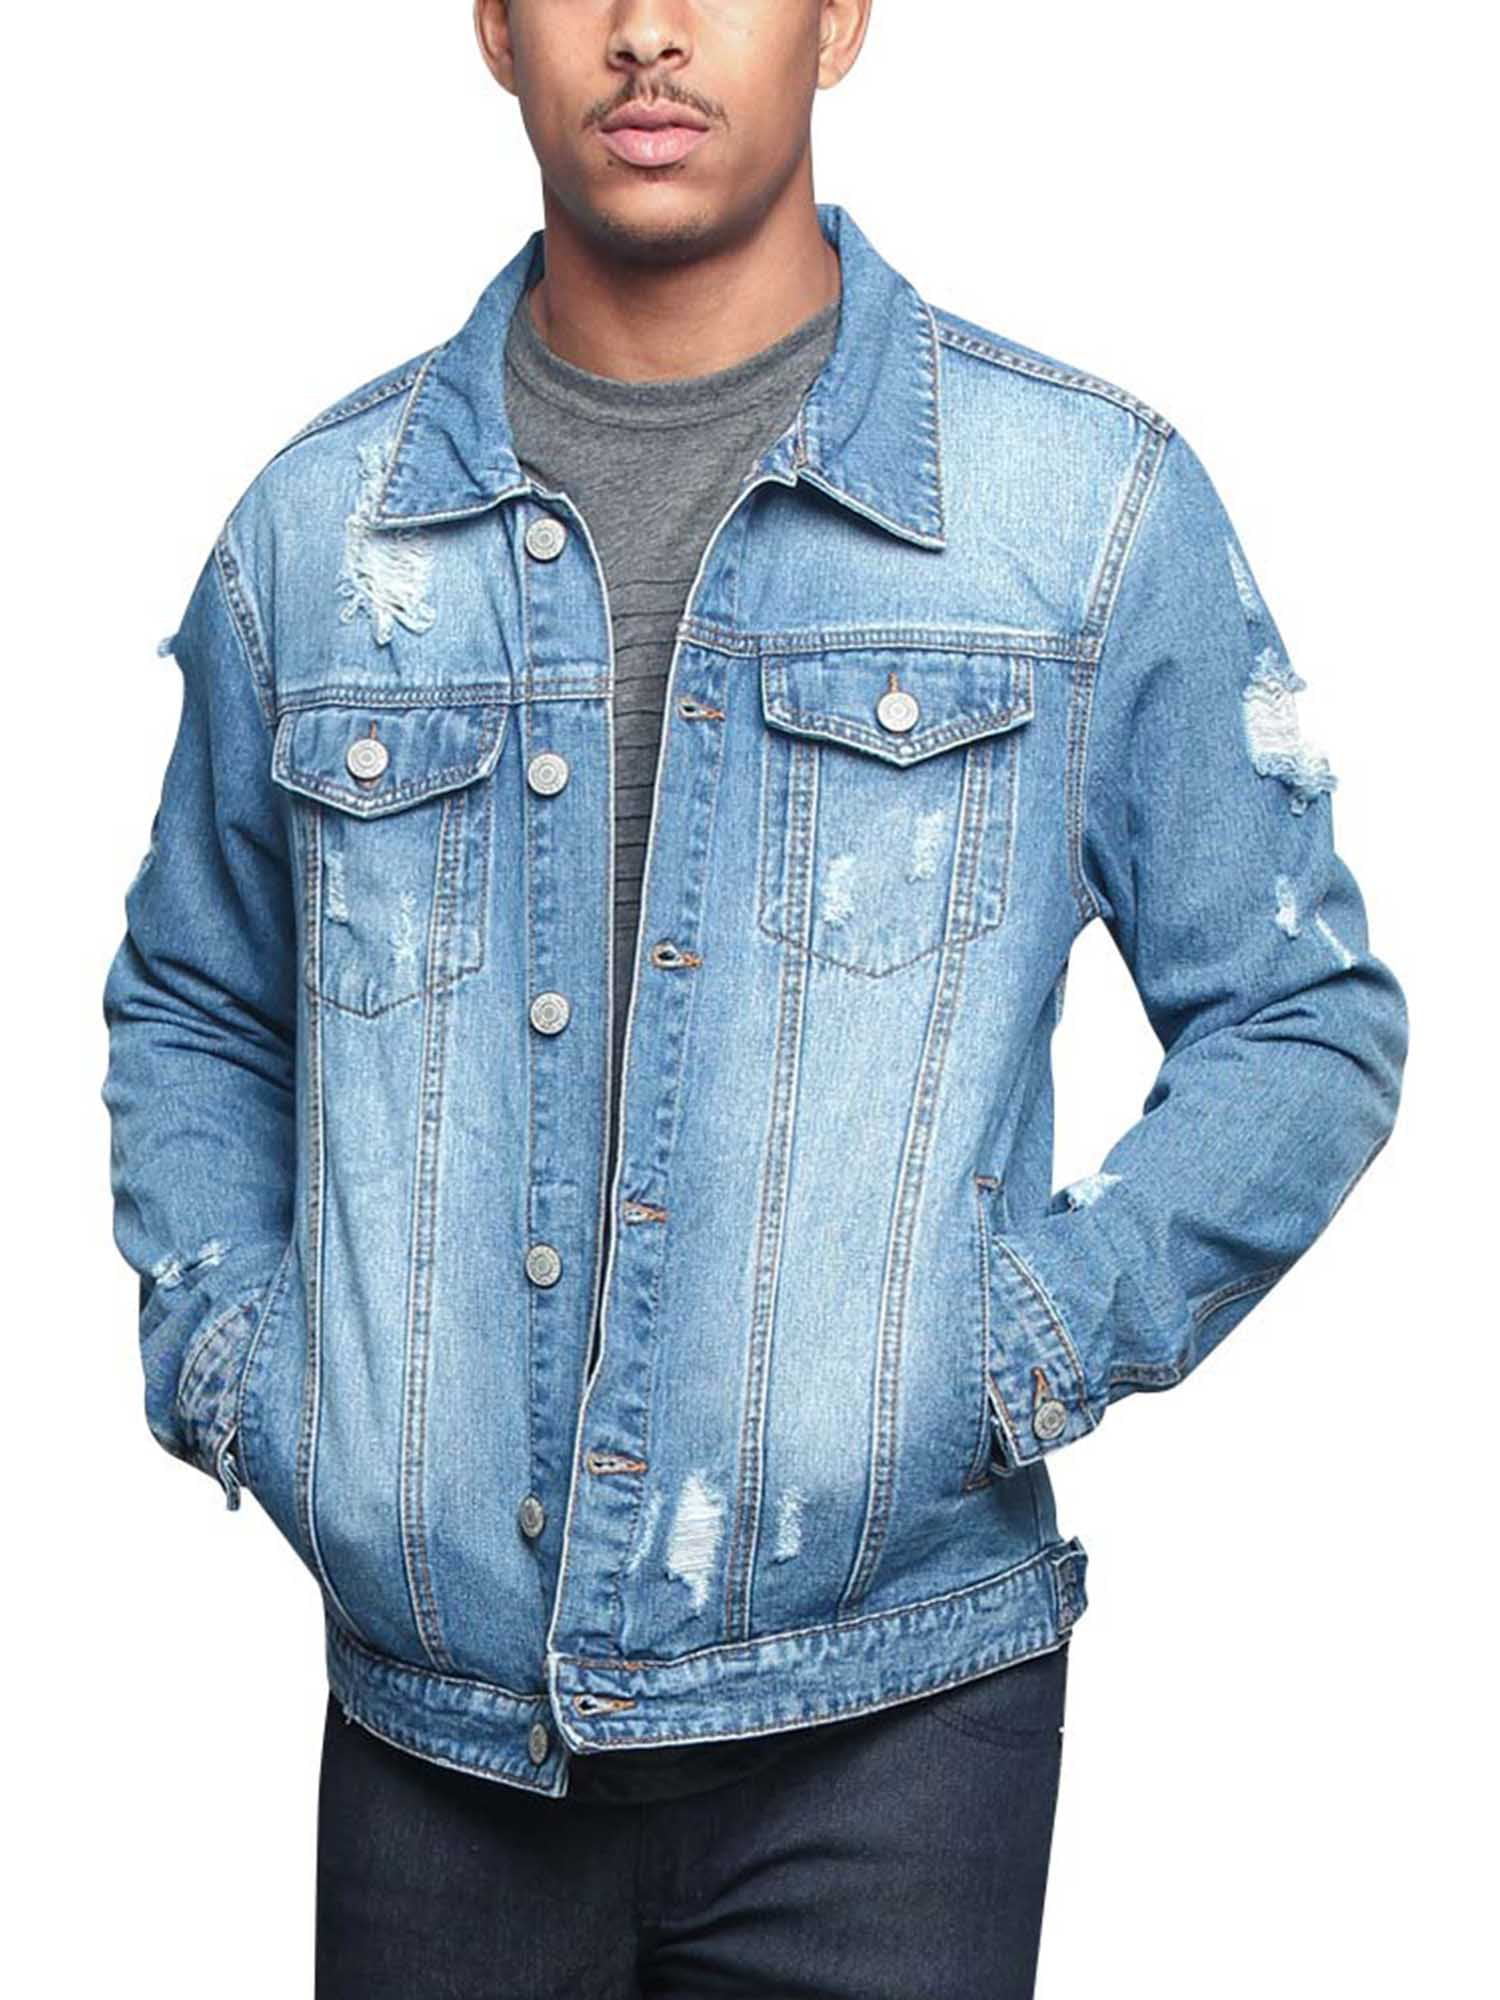 2x mens jean jacket